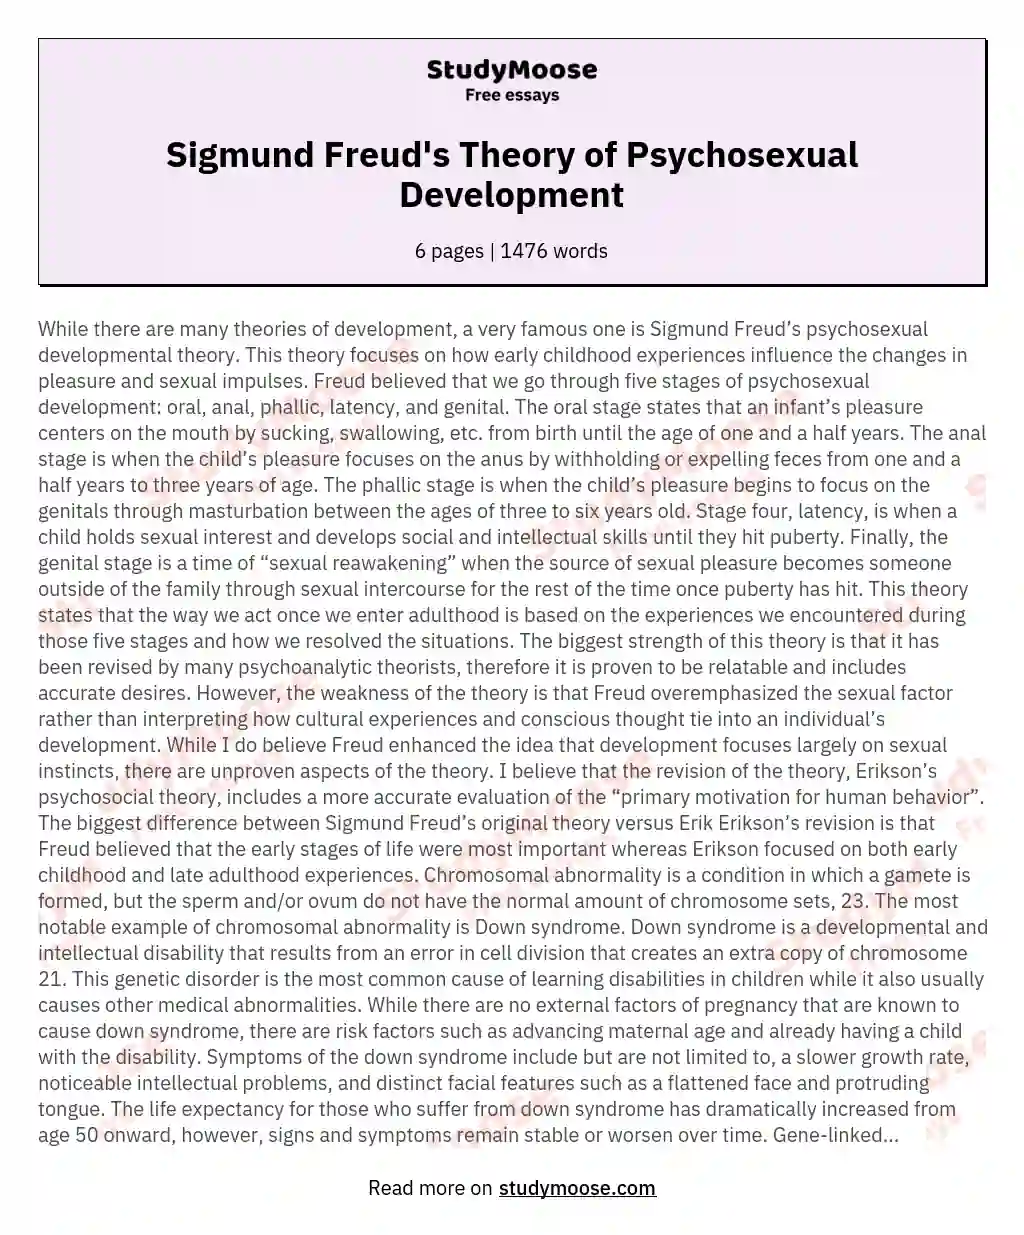 Sigmund Freud's Theory of Psychosexual Development essay